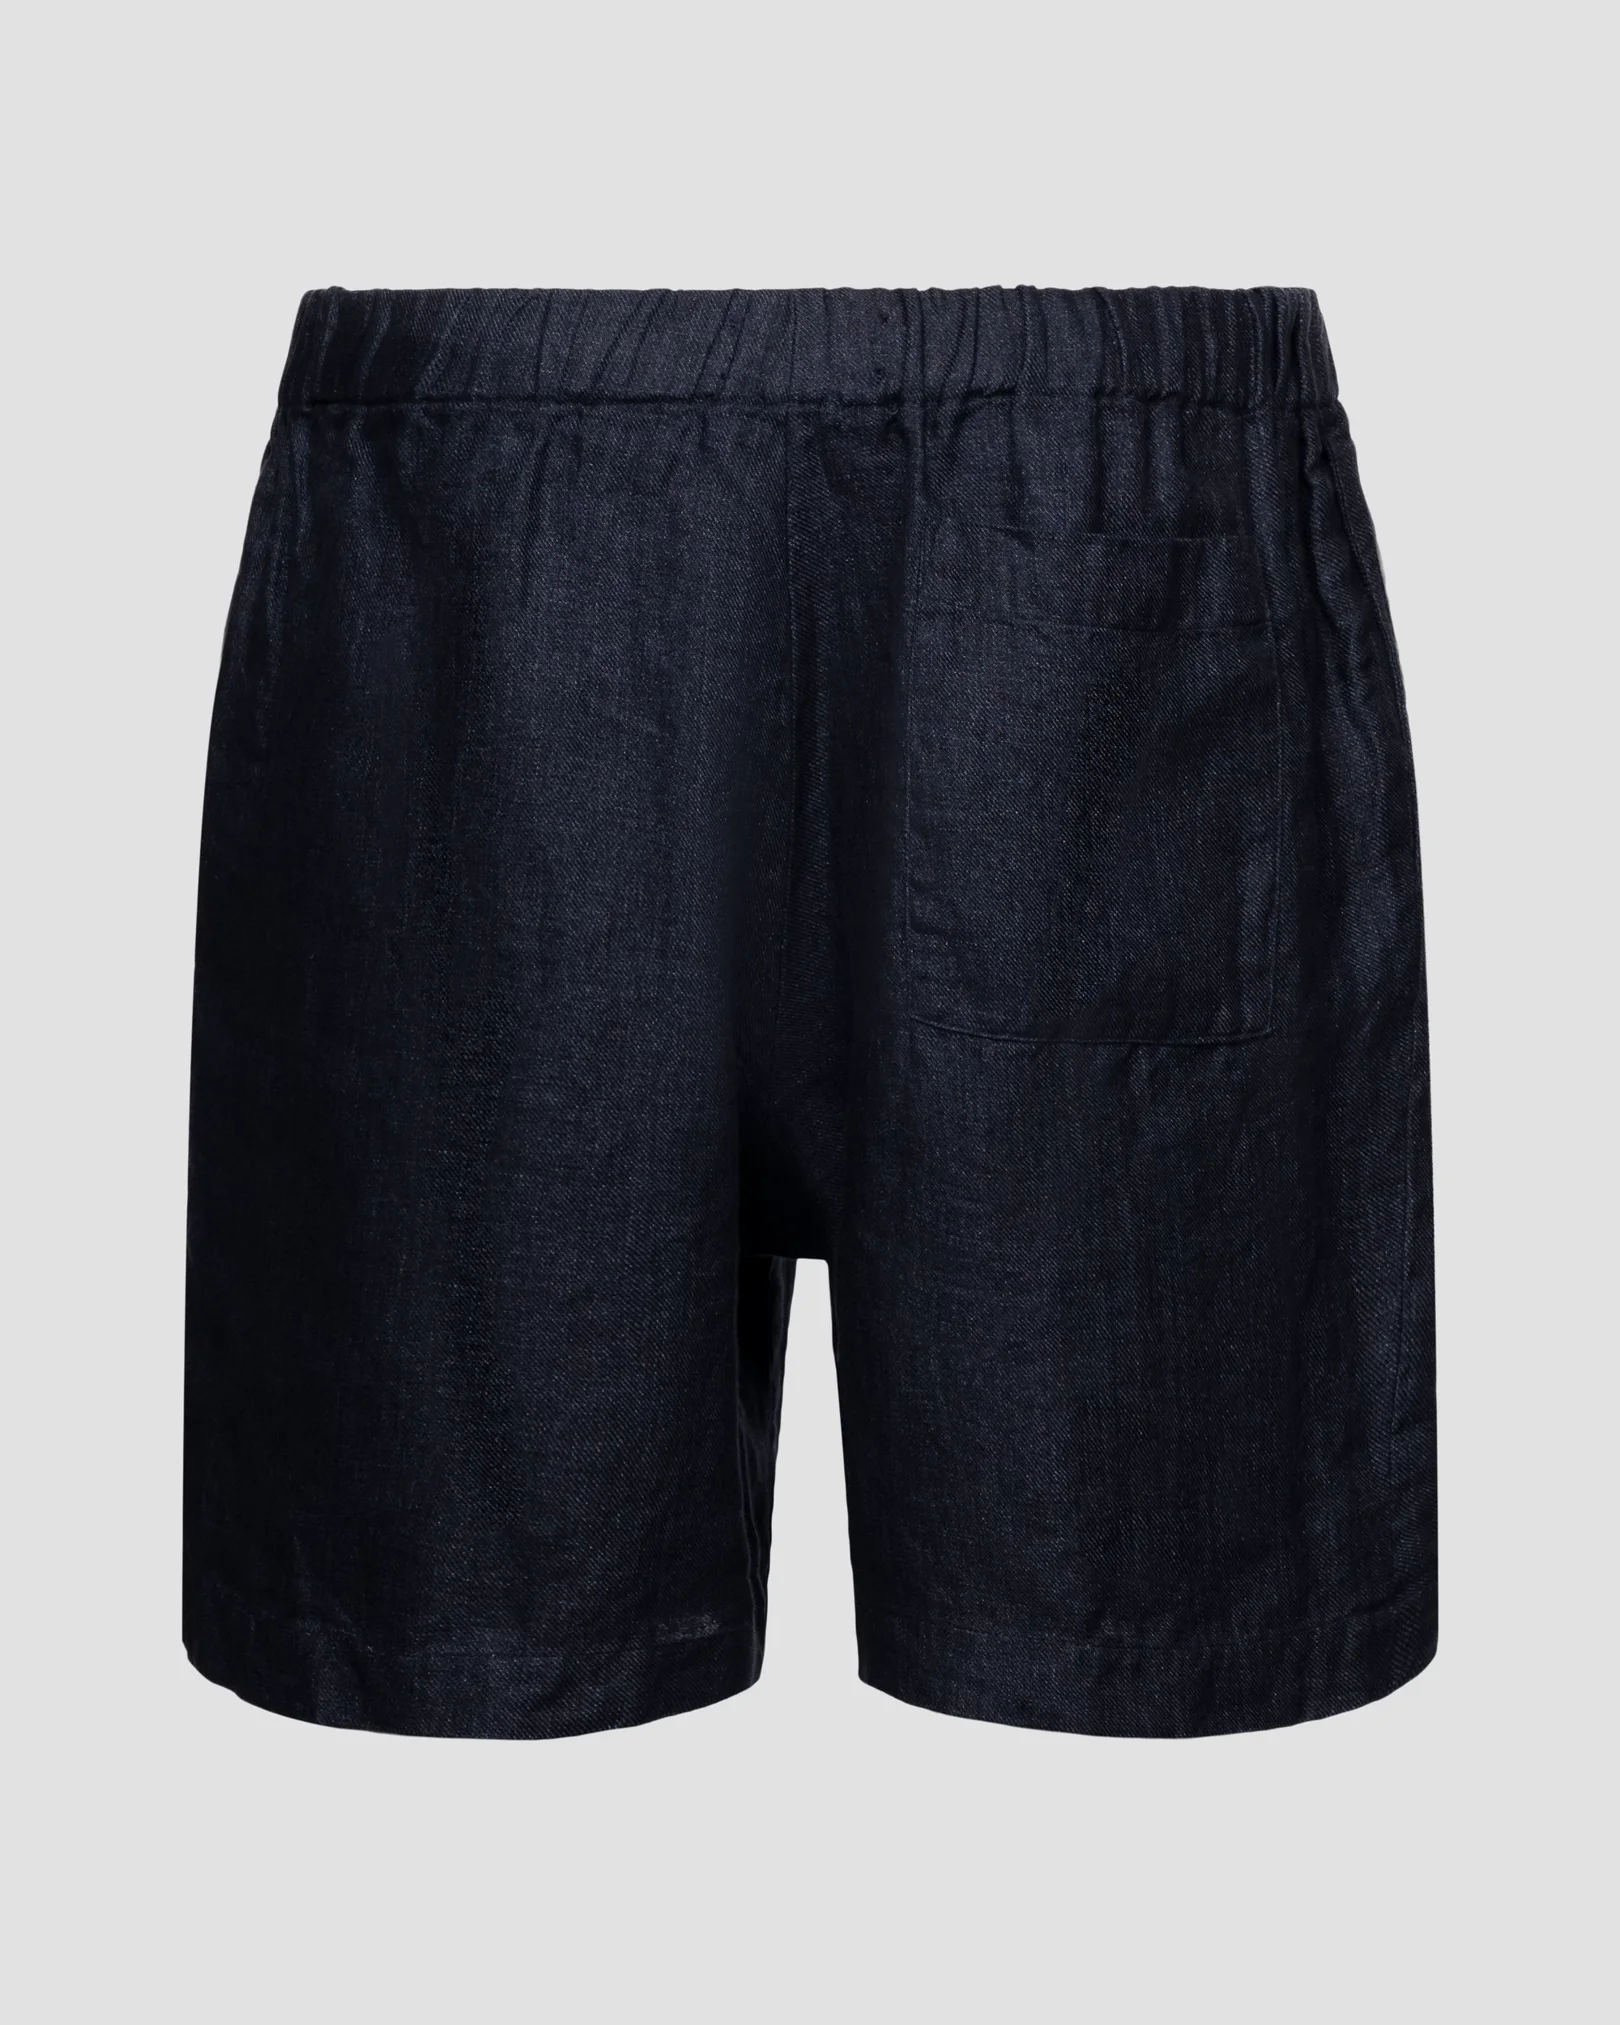 Eton - navy blue linen shorts